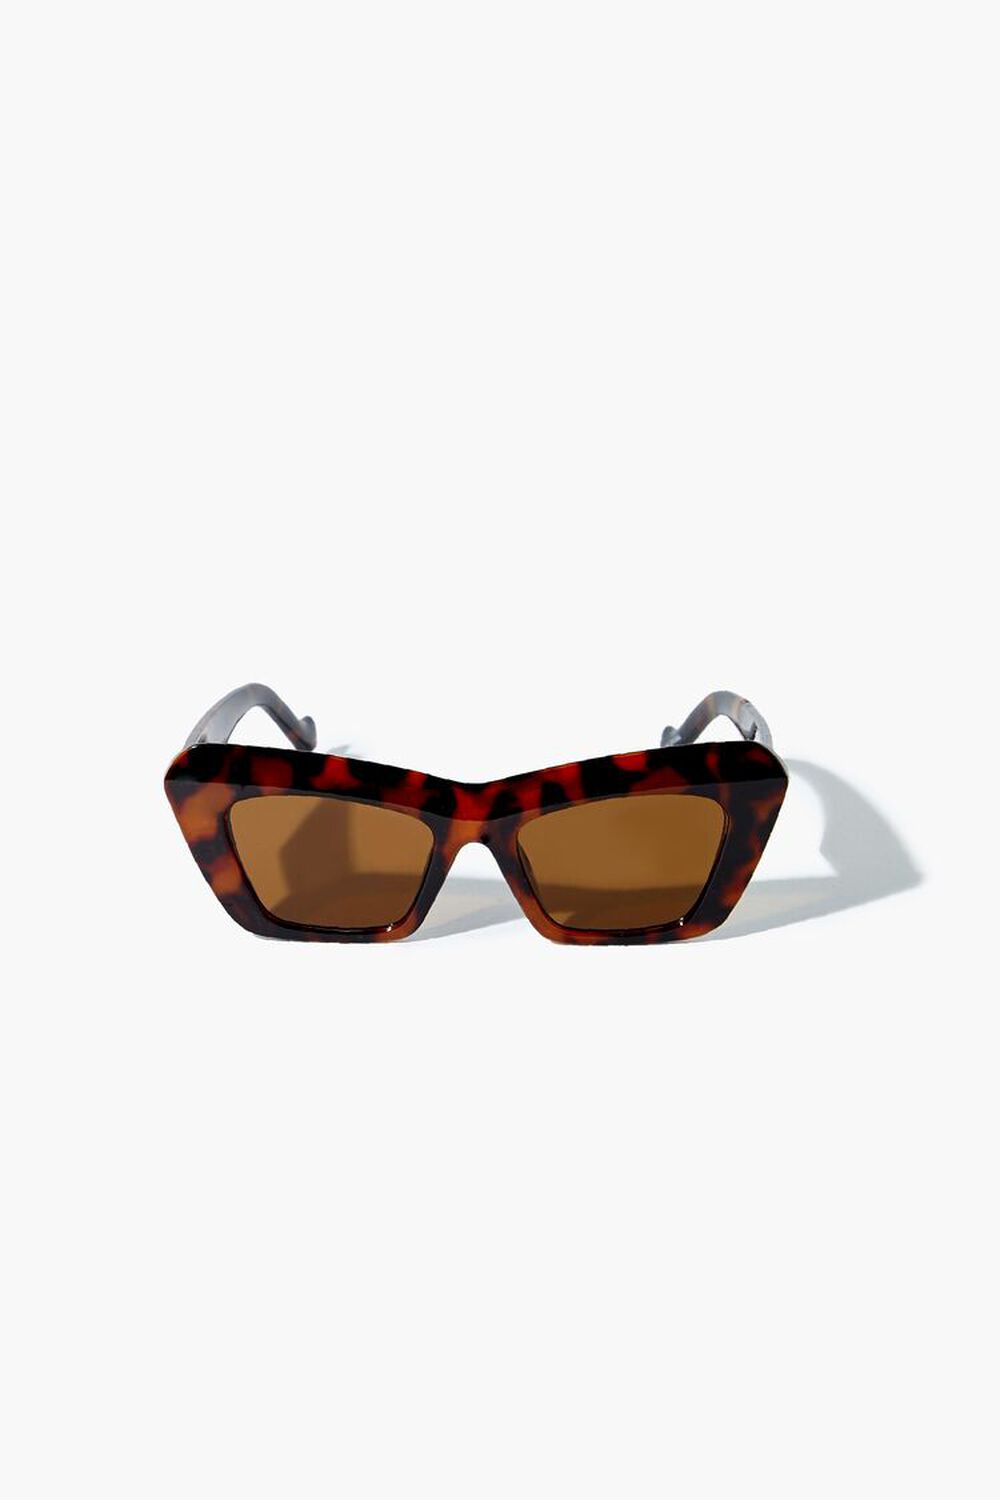 BROWN/BROWN Cat-Eye Frame Sunglasses, image 1